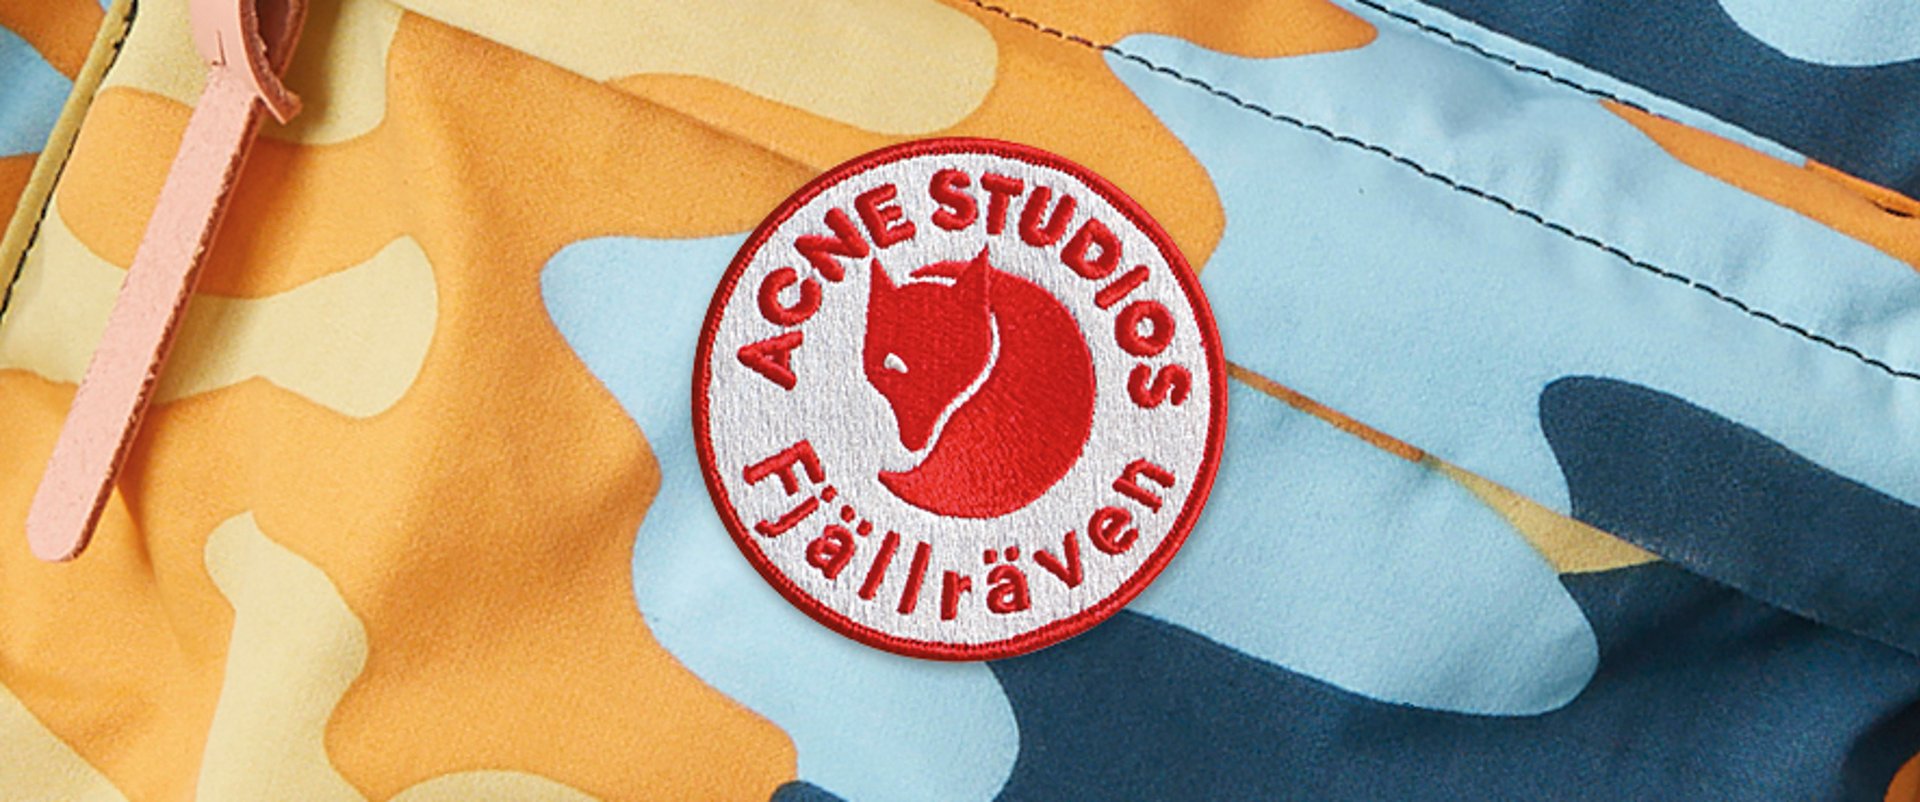 Closeup of Acne Studios and Fjallraven cobranded logo